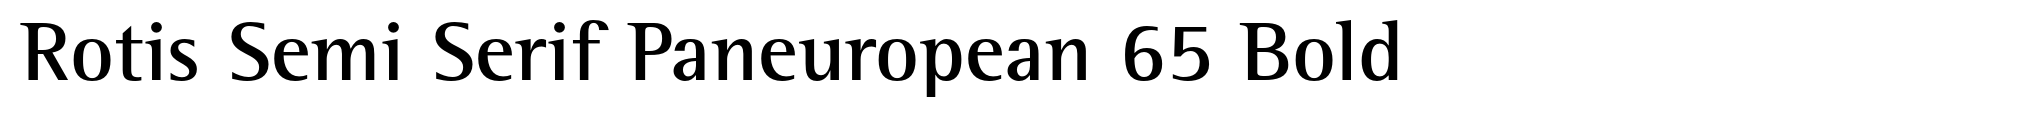 Rotis Semi Serif Paneuropean 65 Bold image